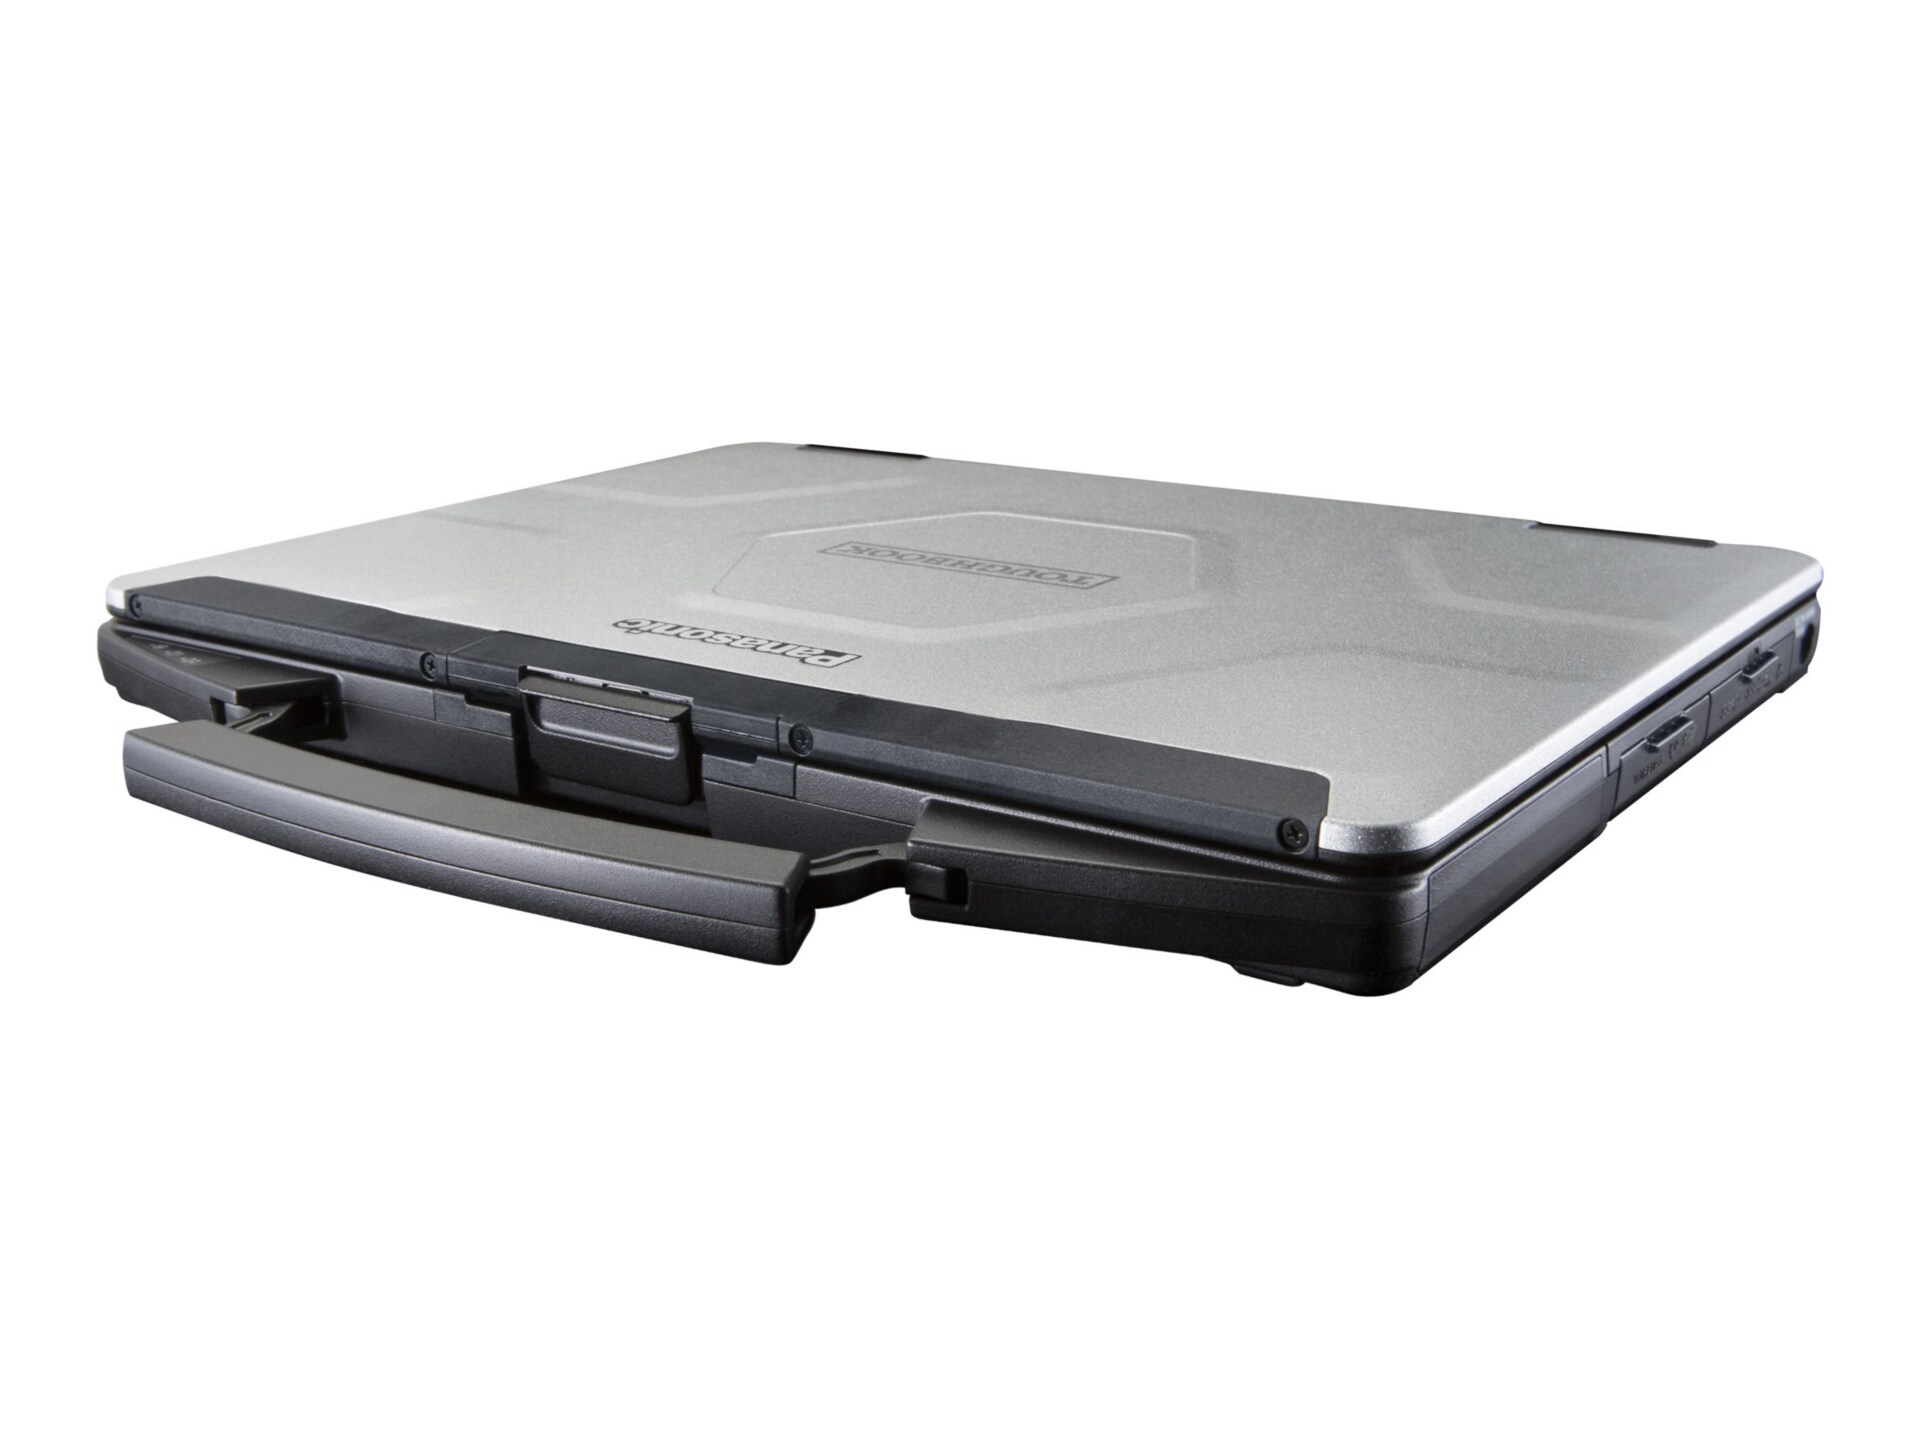 Panasonic Toughbook 54 Gloved Multi Touch - 14" - Core i7 6600U - 8 GB RAM - 256 GB SSD